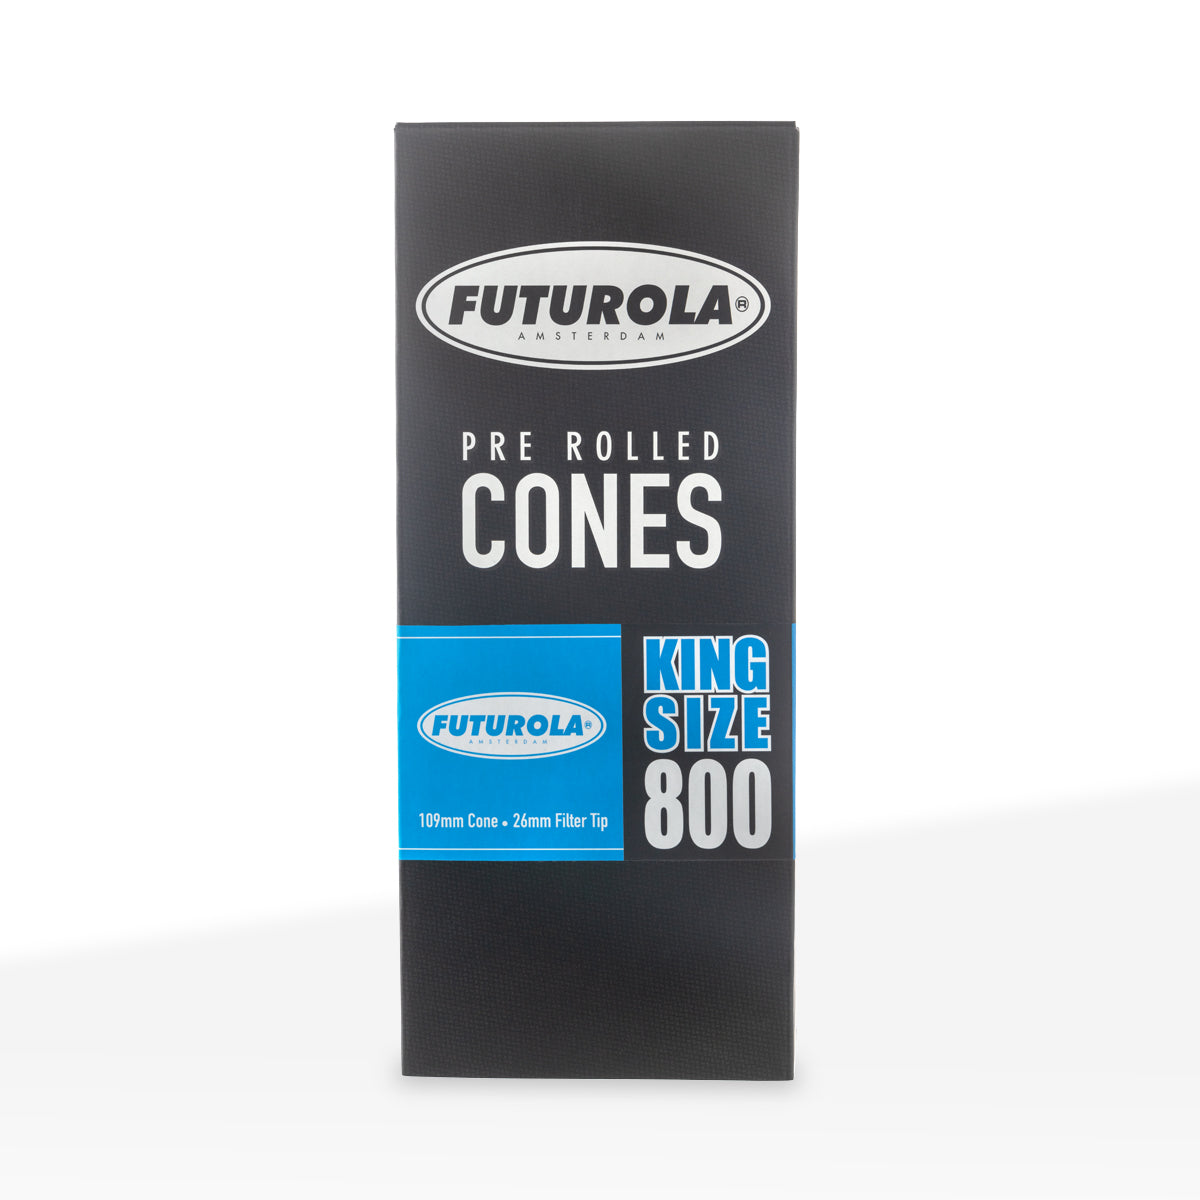 FUTUROLA® | Pre-Rolled Cones King Size | 110mm - White Paper - 800 Count